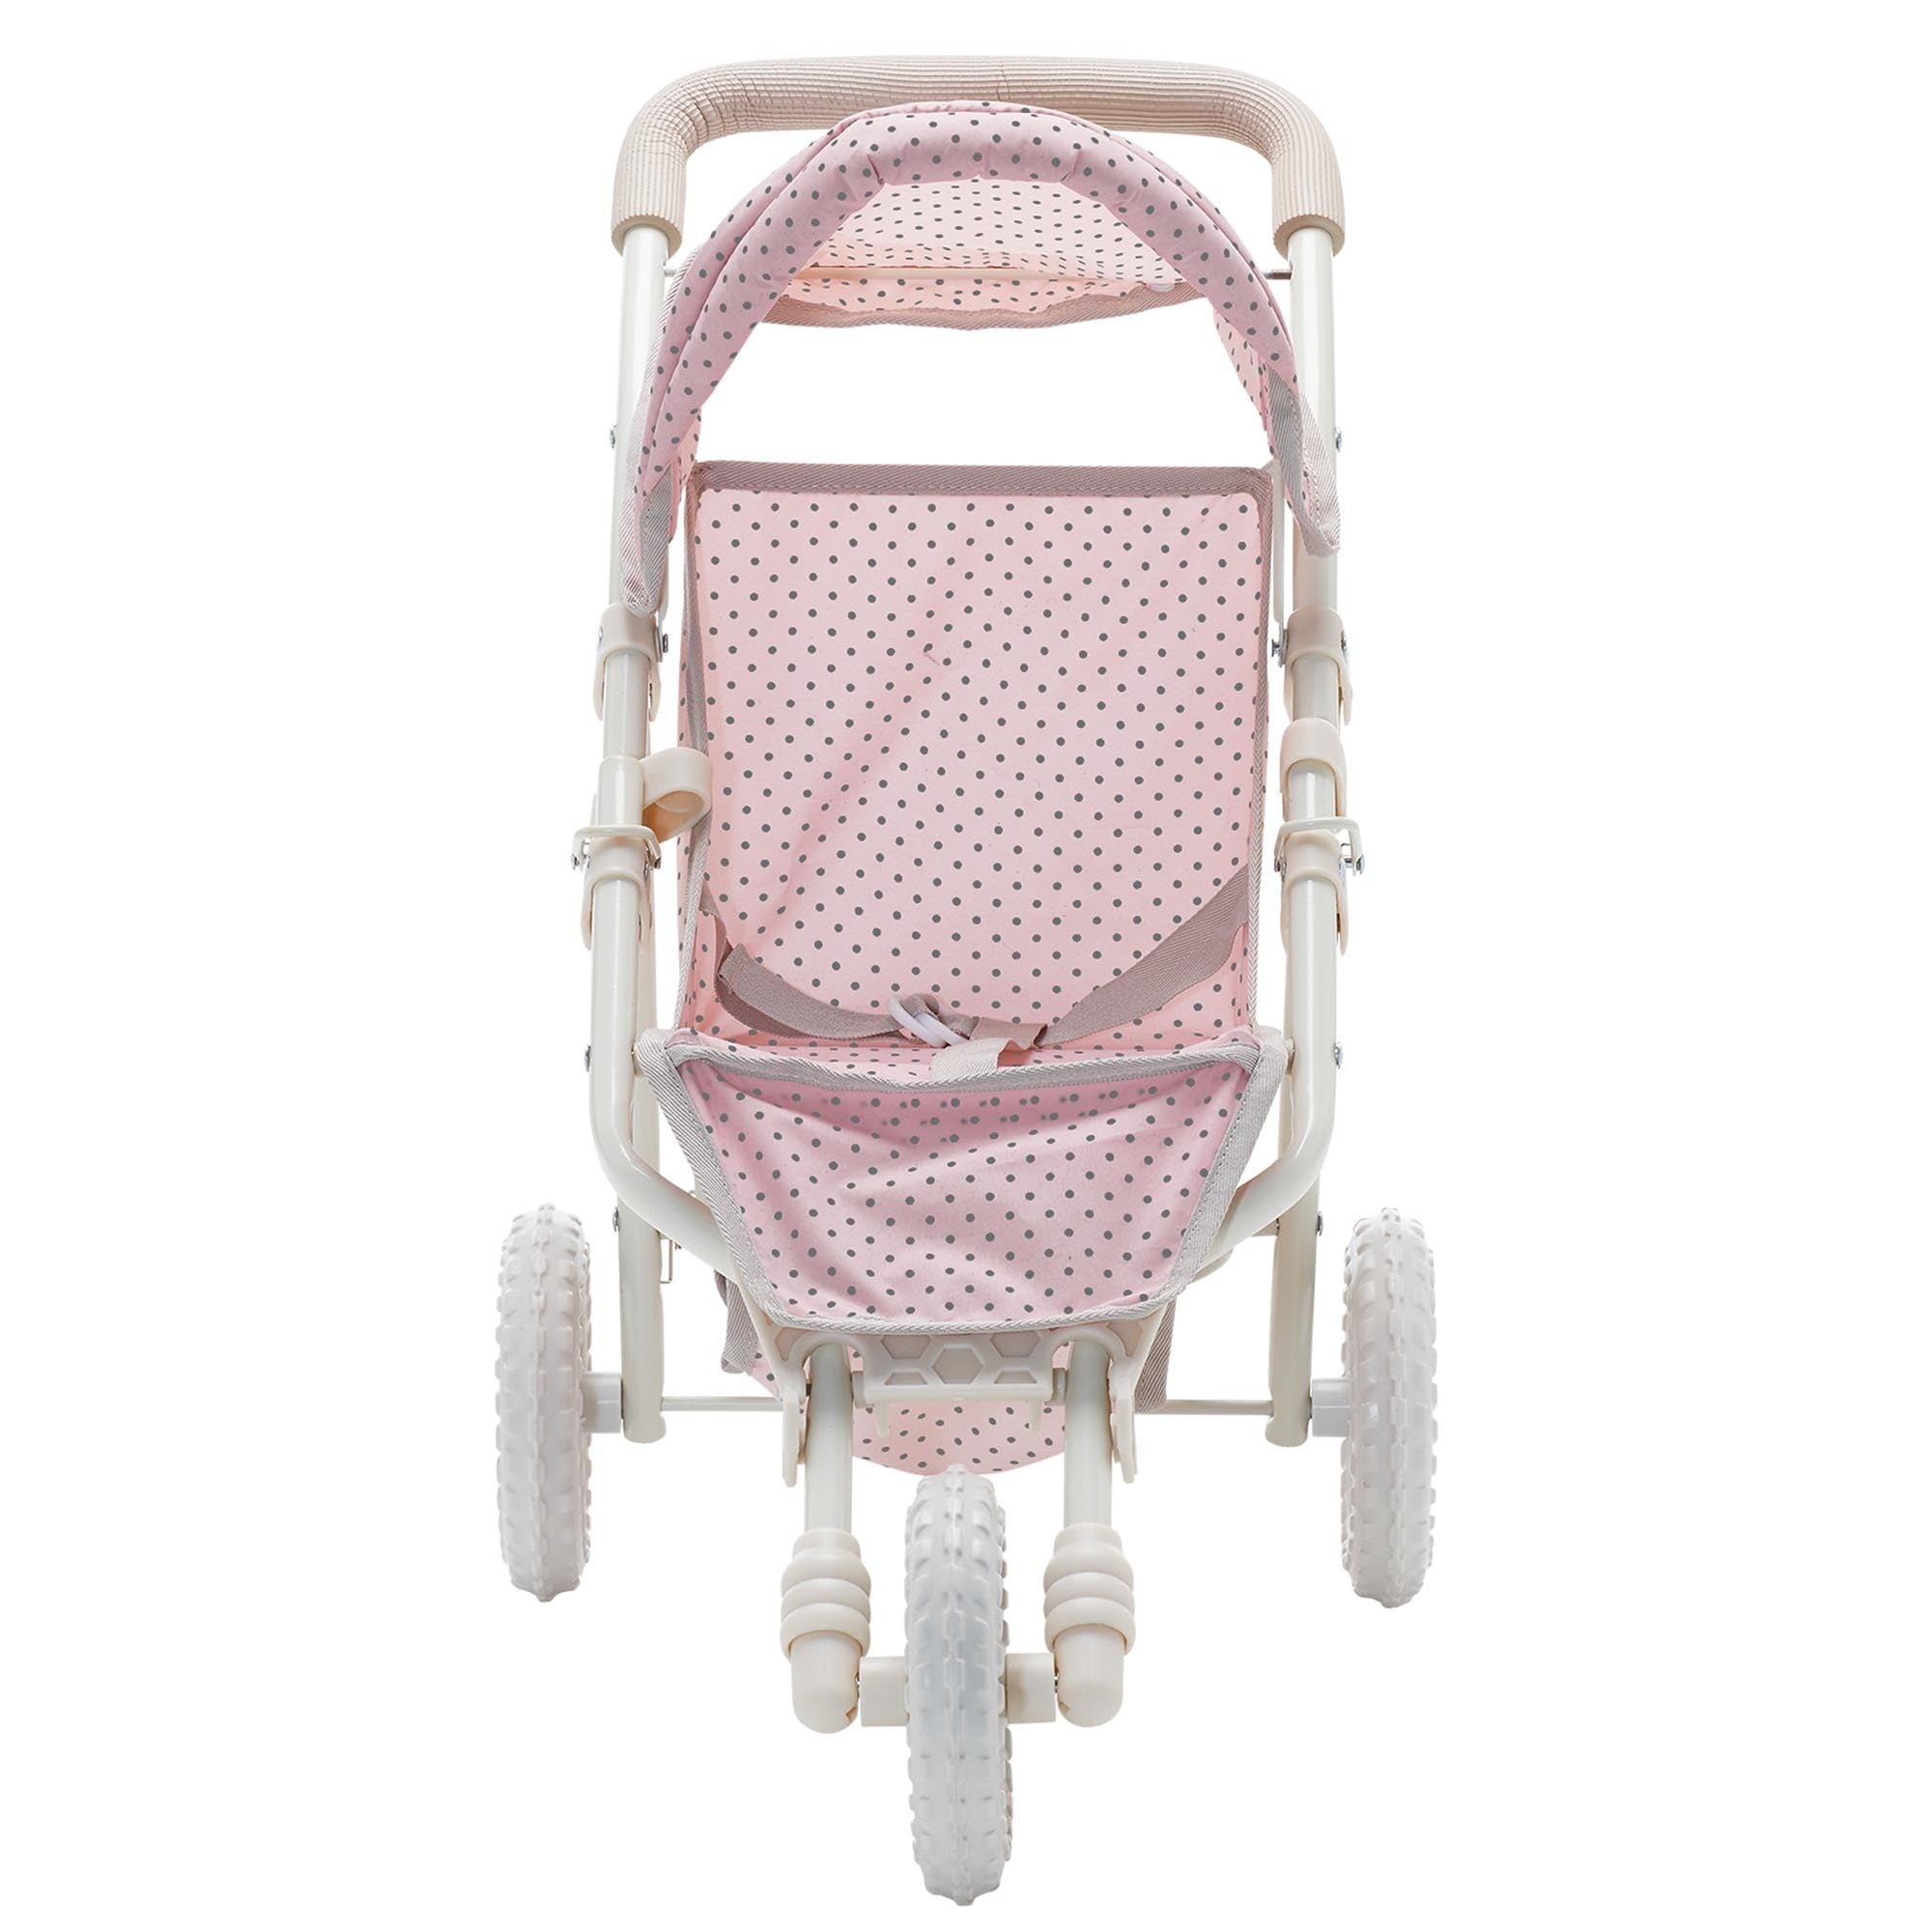 Olivia's Little World Polka Dots Princess Baby Doll Jogging Stroller, Pink